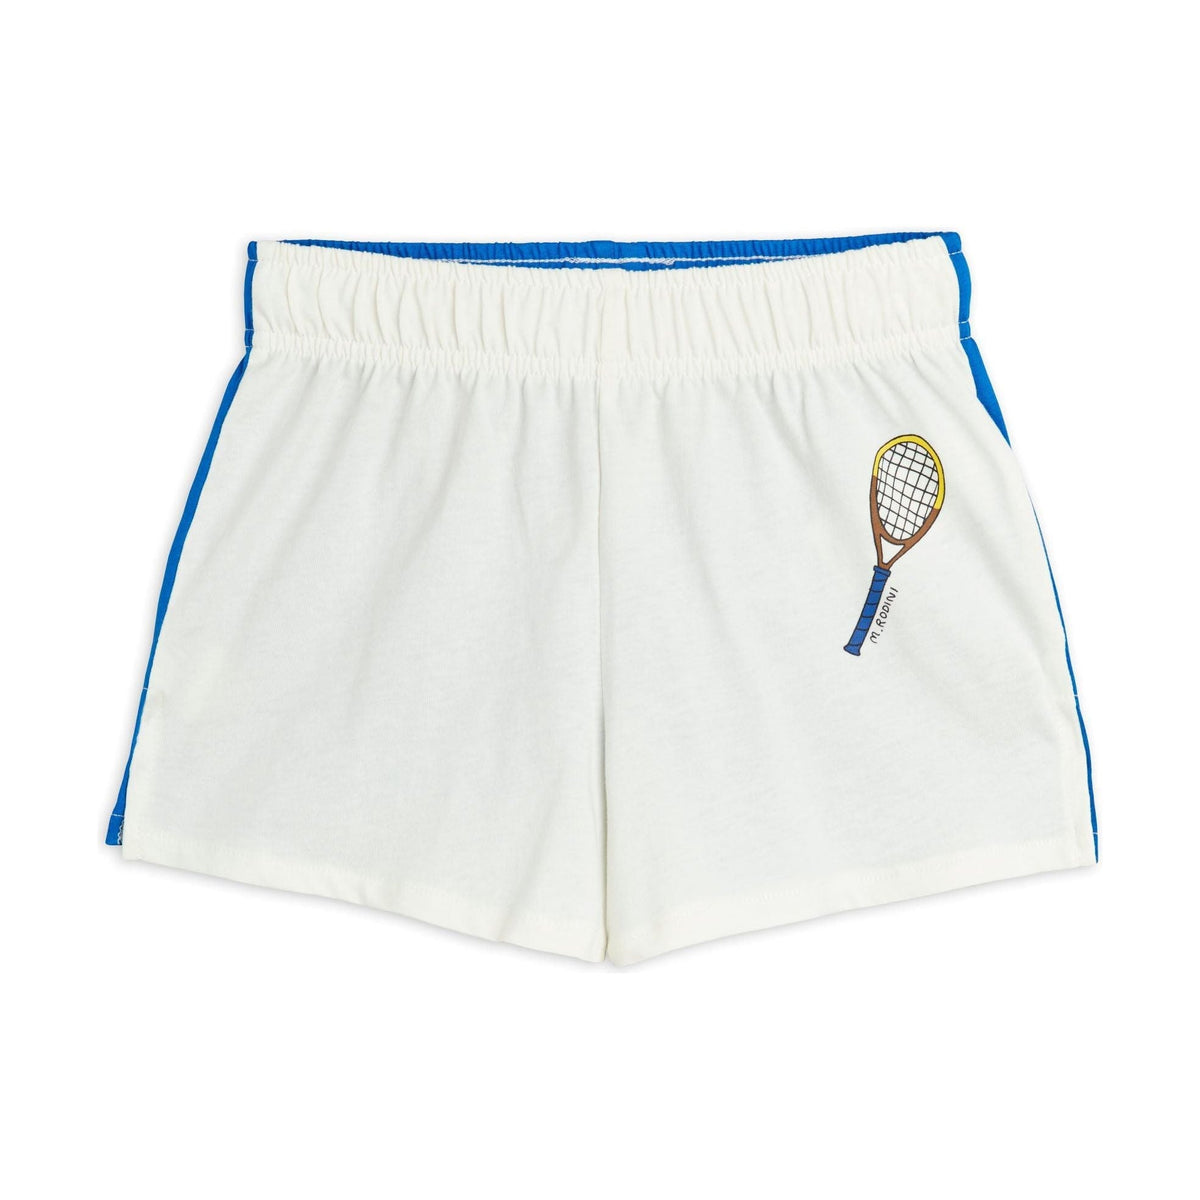 Tennis Sp Shorts - White